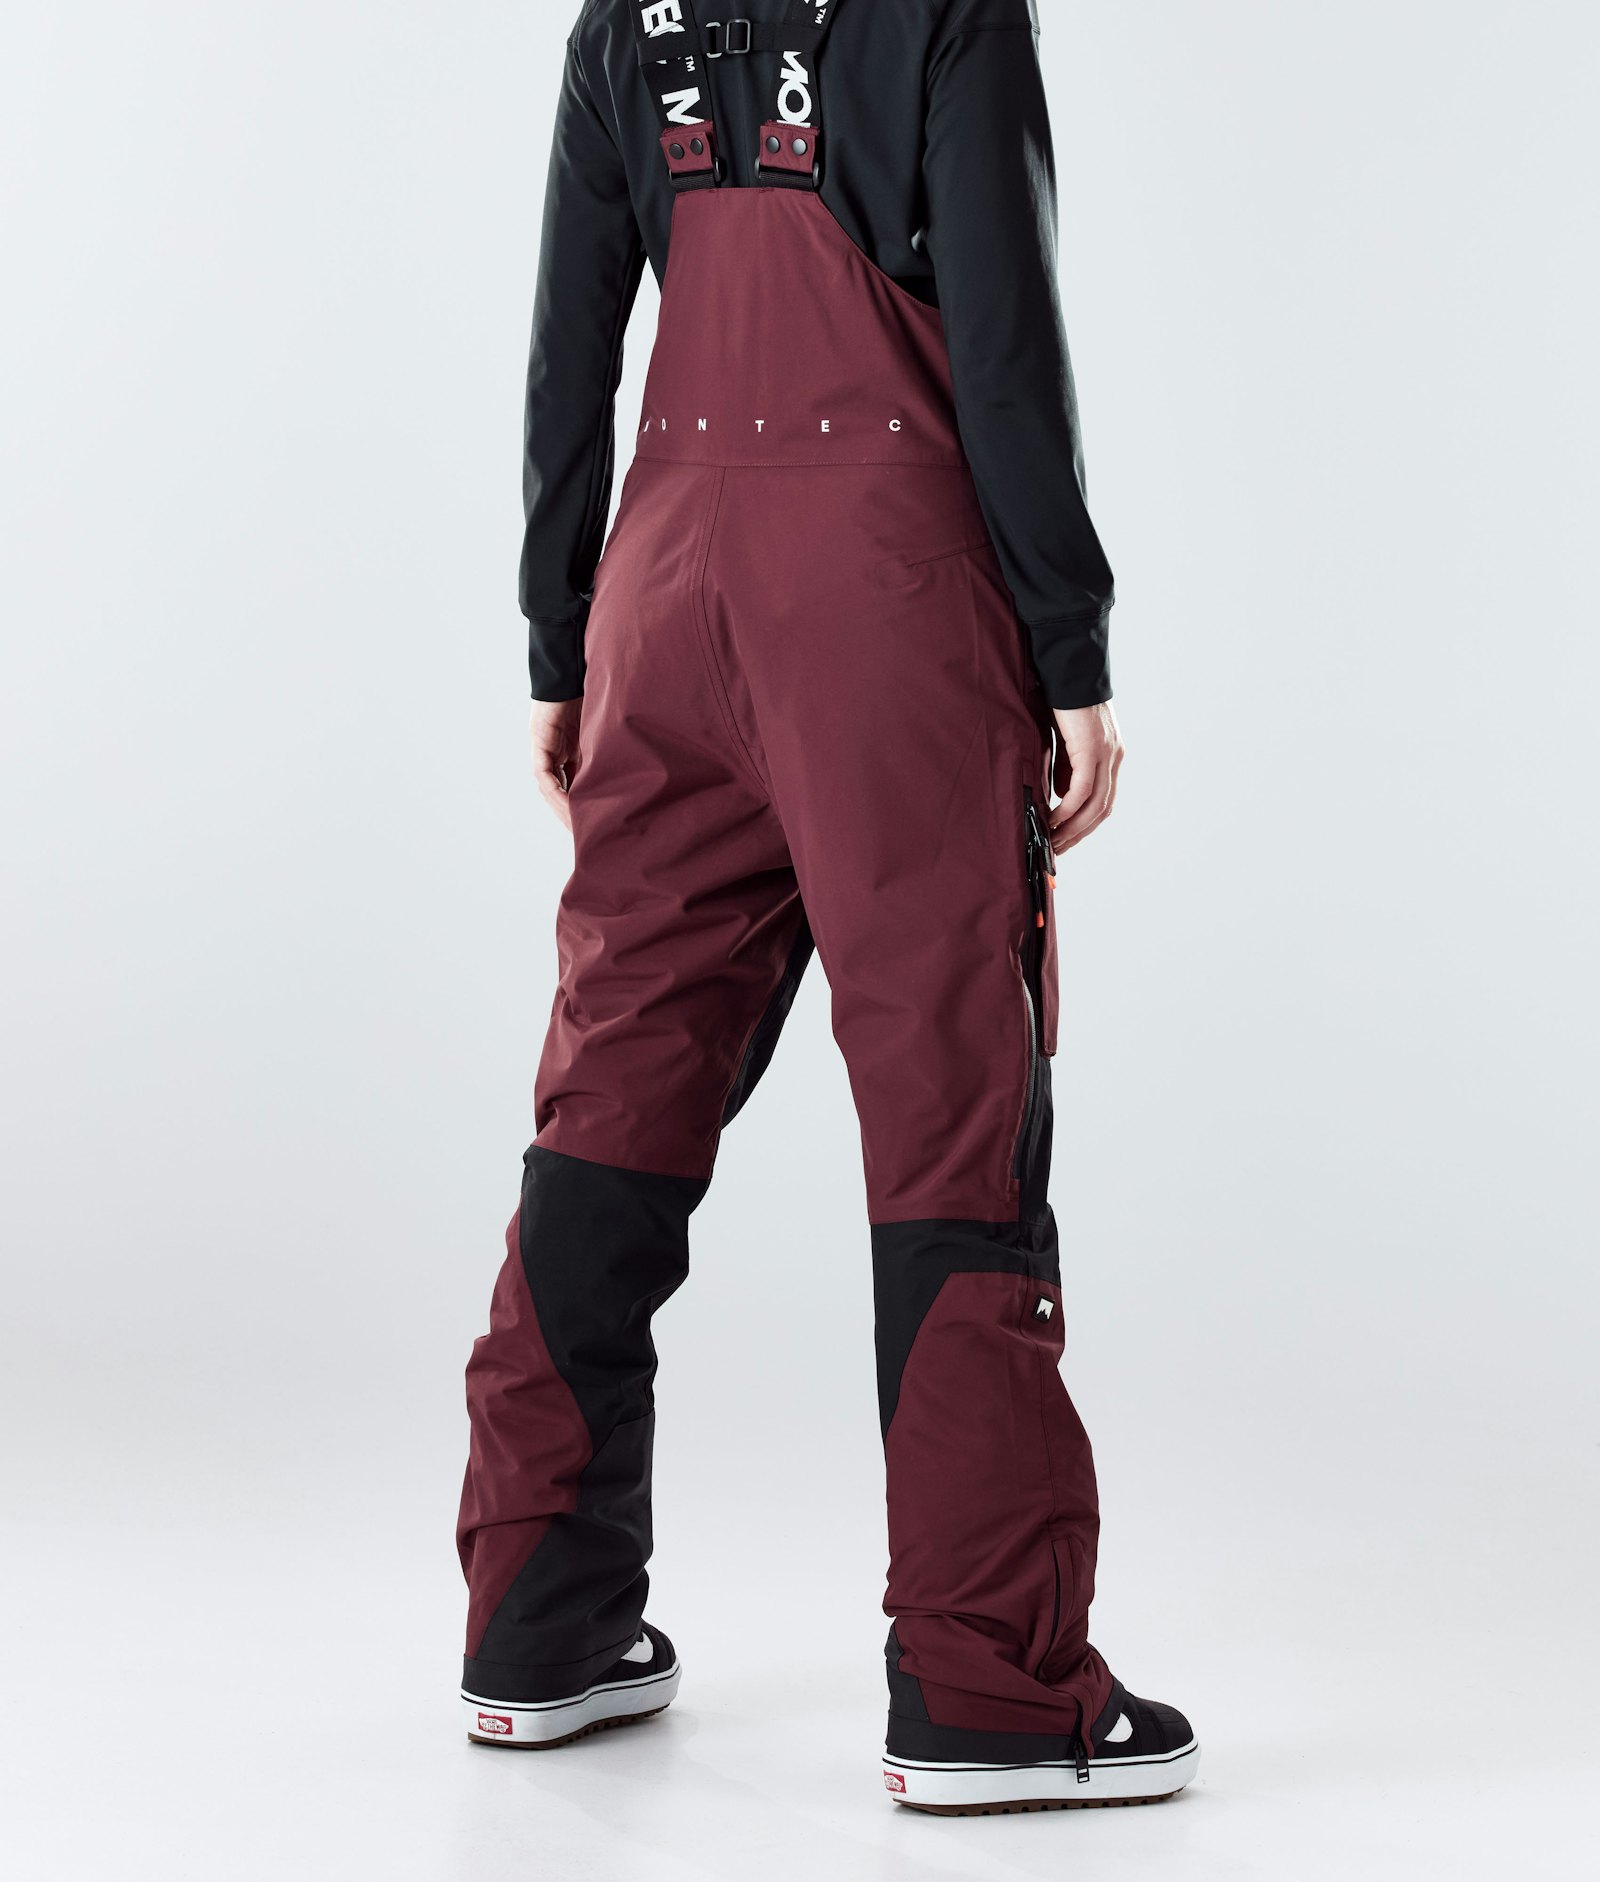 Fawk W 2020 Pantalon de Snowboard Femme Burgundy/Black